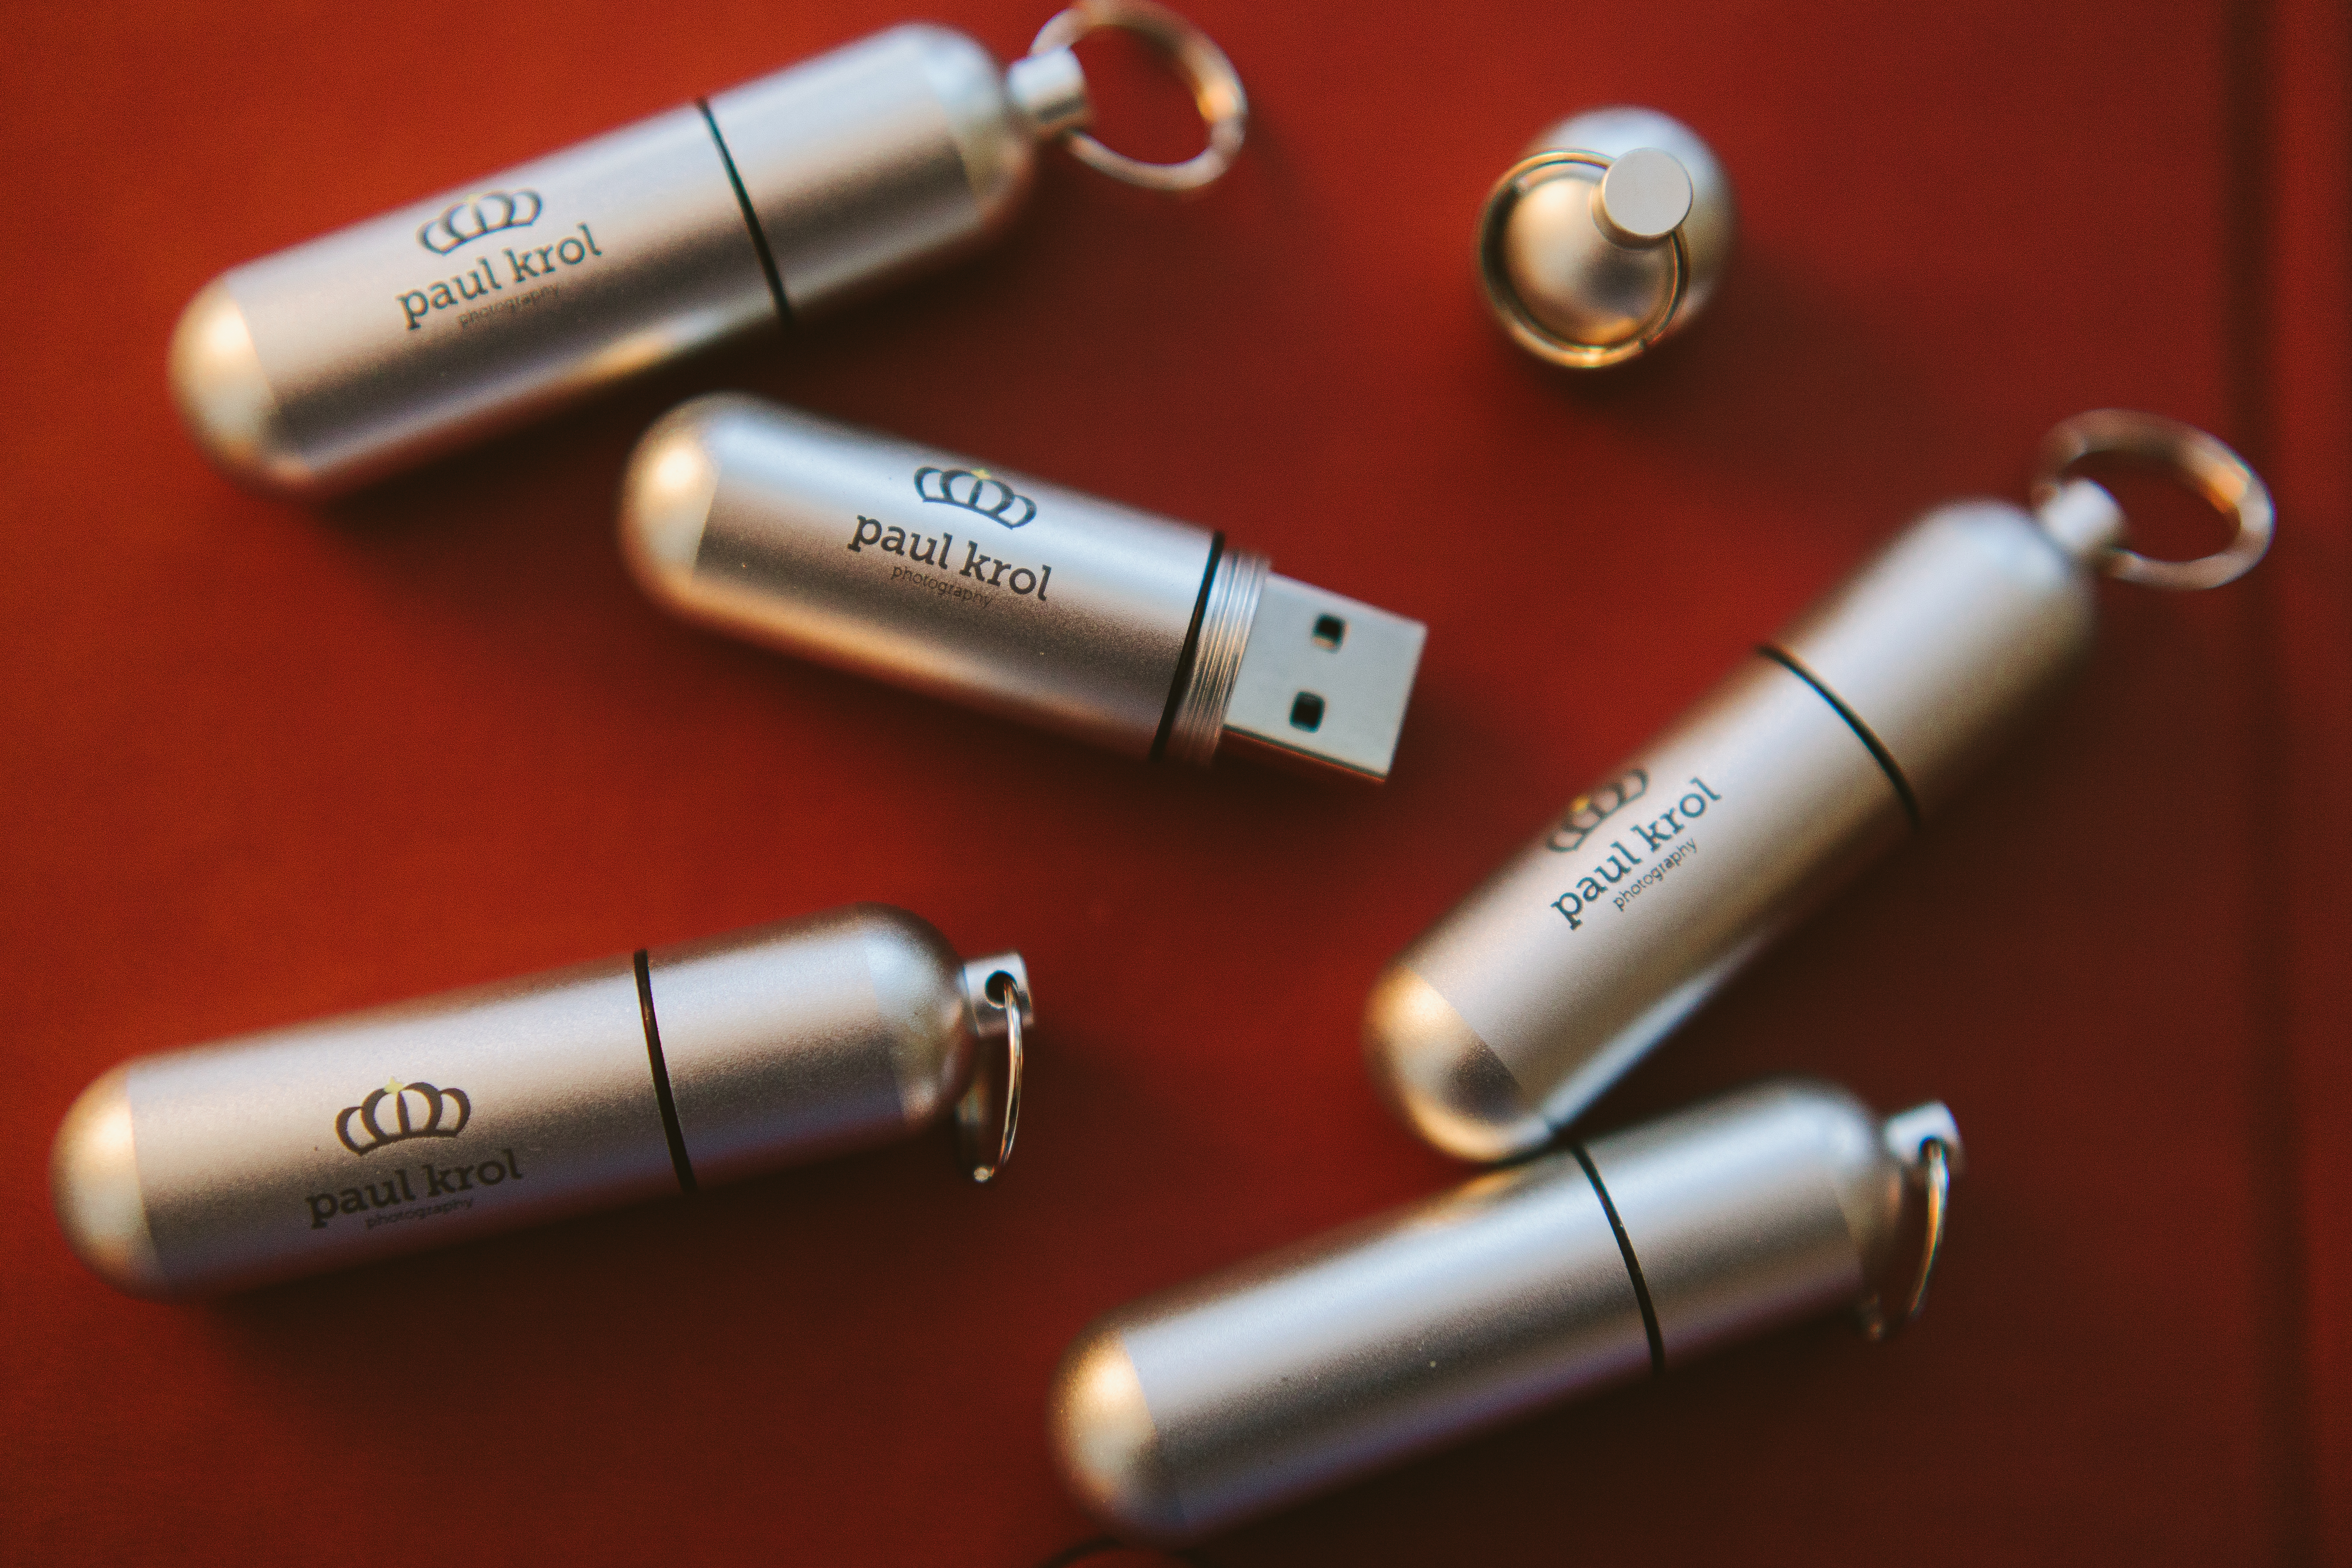 USB Memory Direct custom branded drives Paul Krol Photography